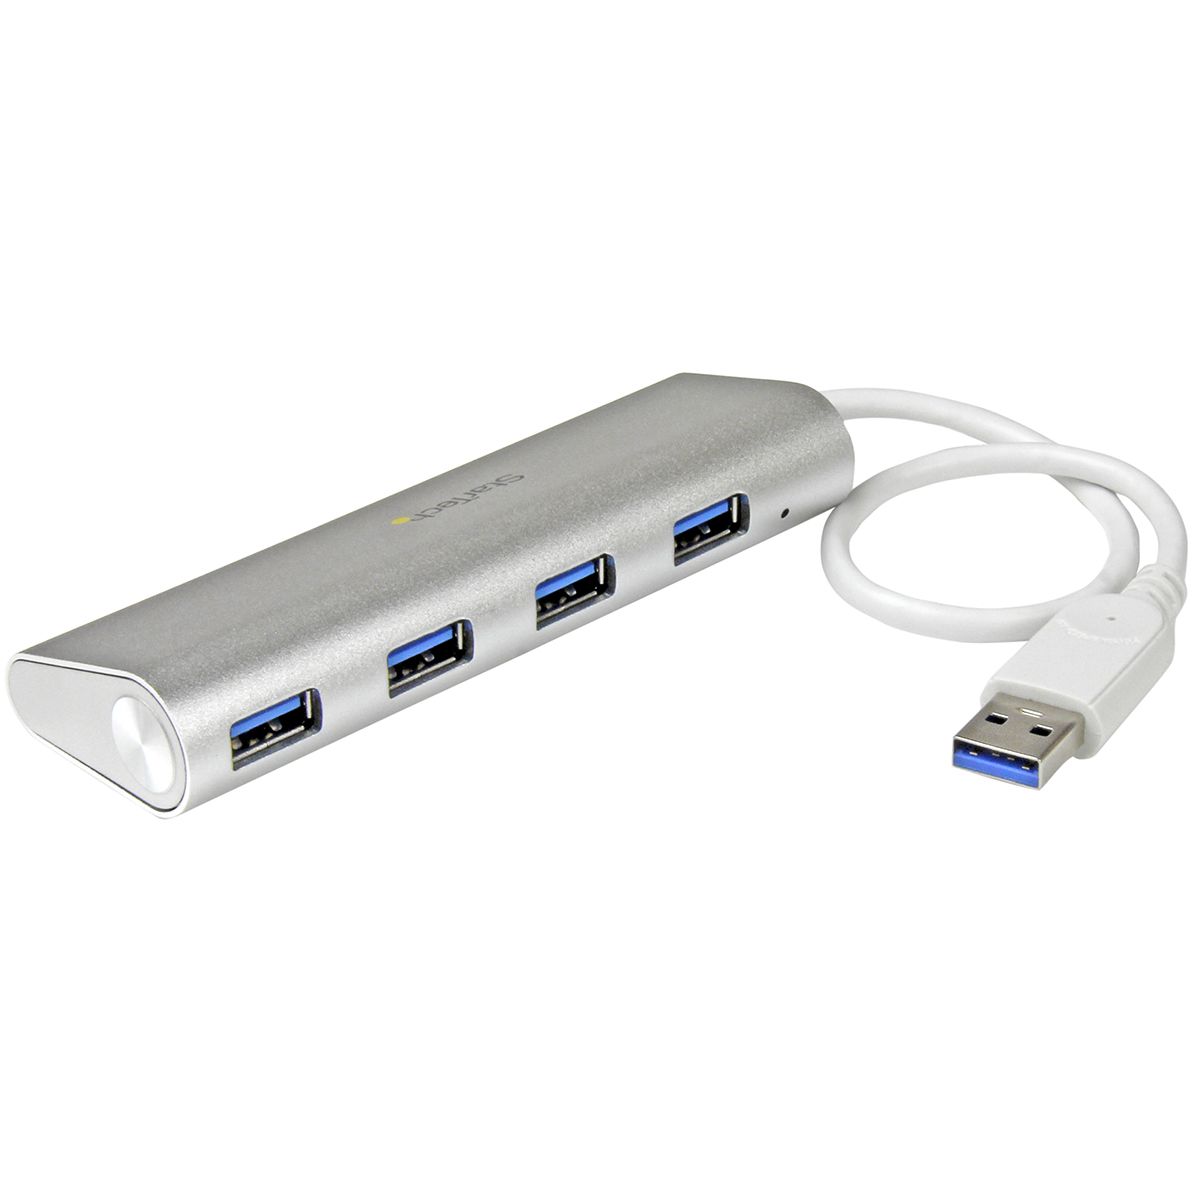 StarTech.com 4 Port USB 3.0 USB A  Hub, USB Bus Powered